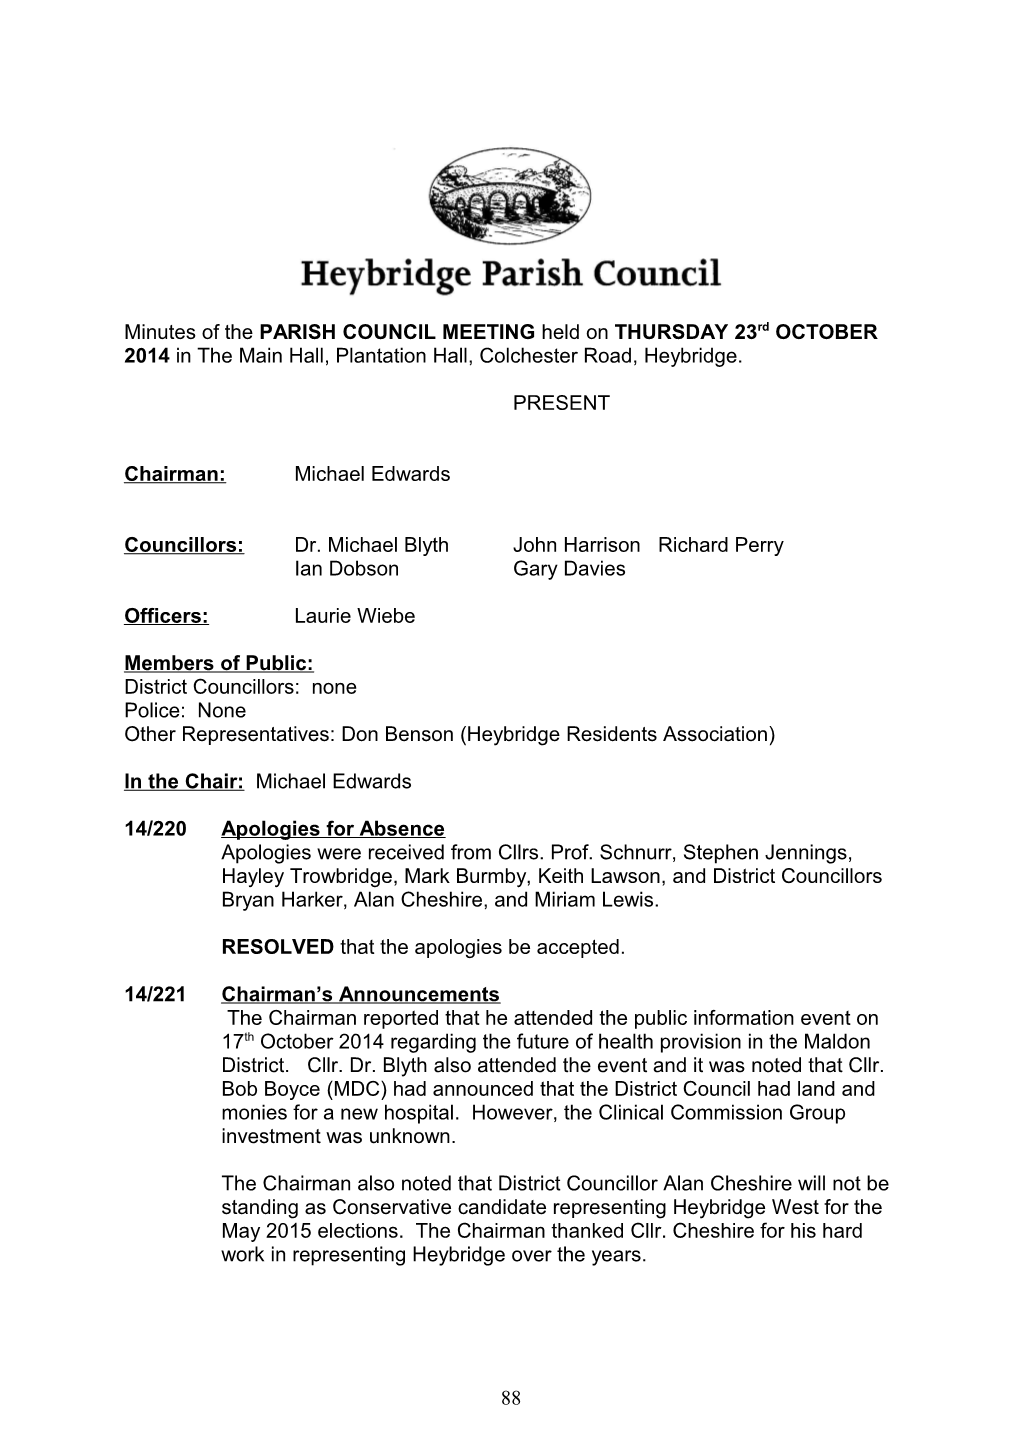 Councillors: Dr. Michael Blyth John Harrison Richard Perry